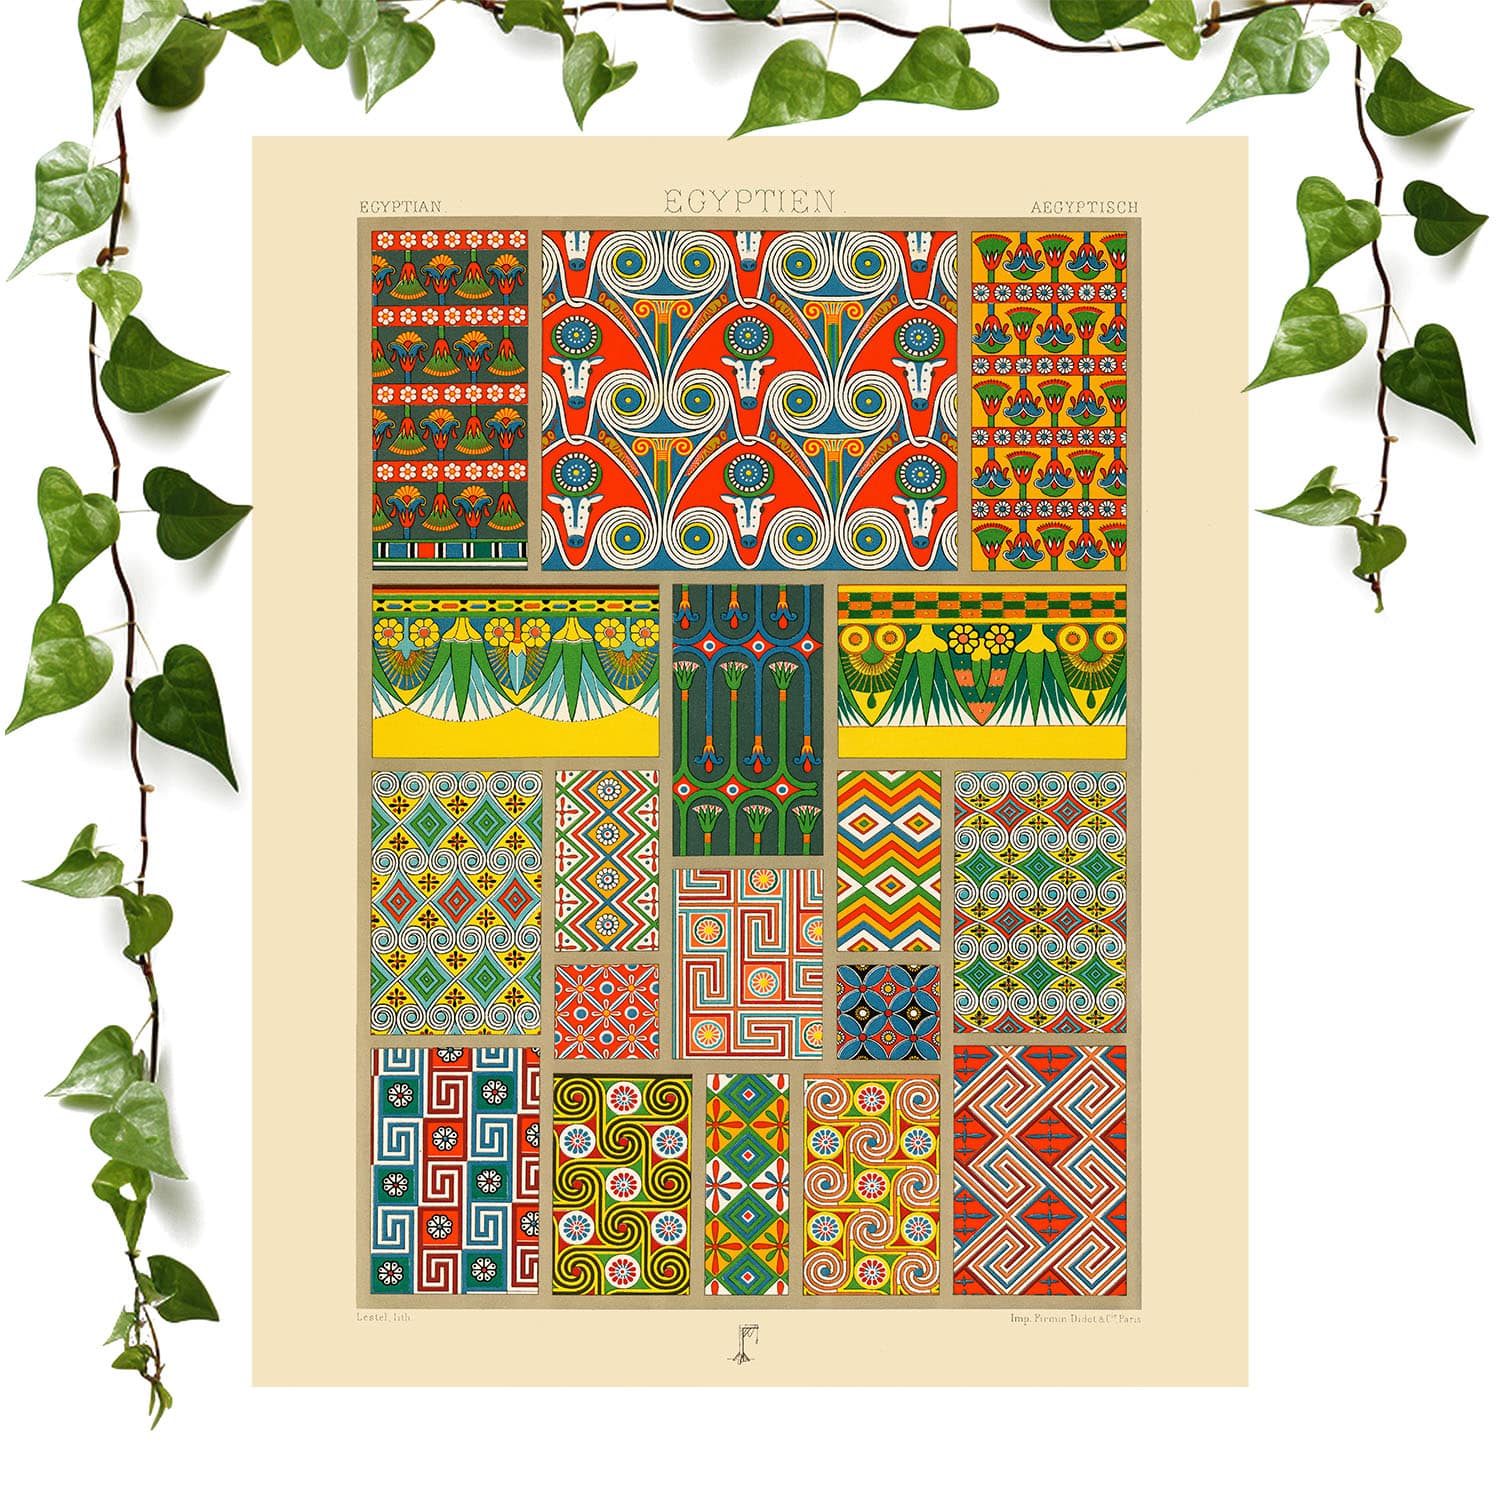 Unique Designs art print egyptian patterns vintage wall art